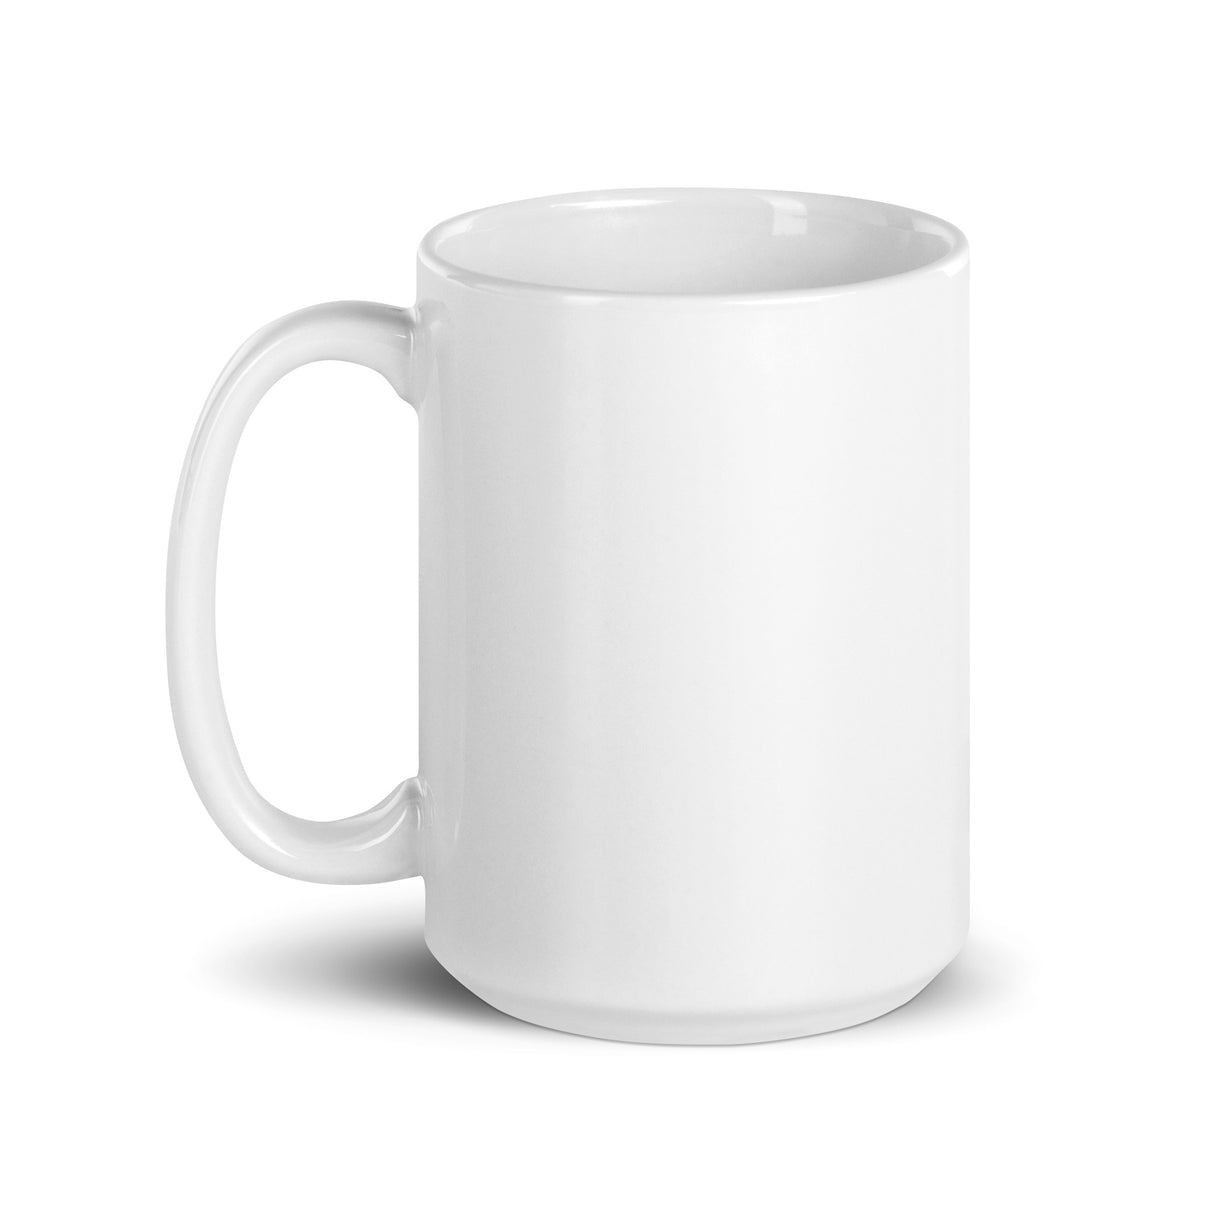 I’m That Jew™ White Glossy Mug